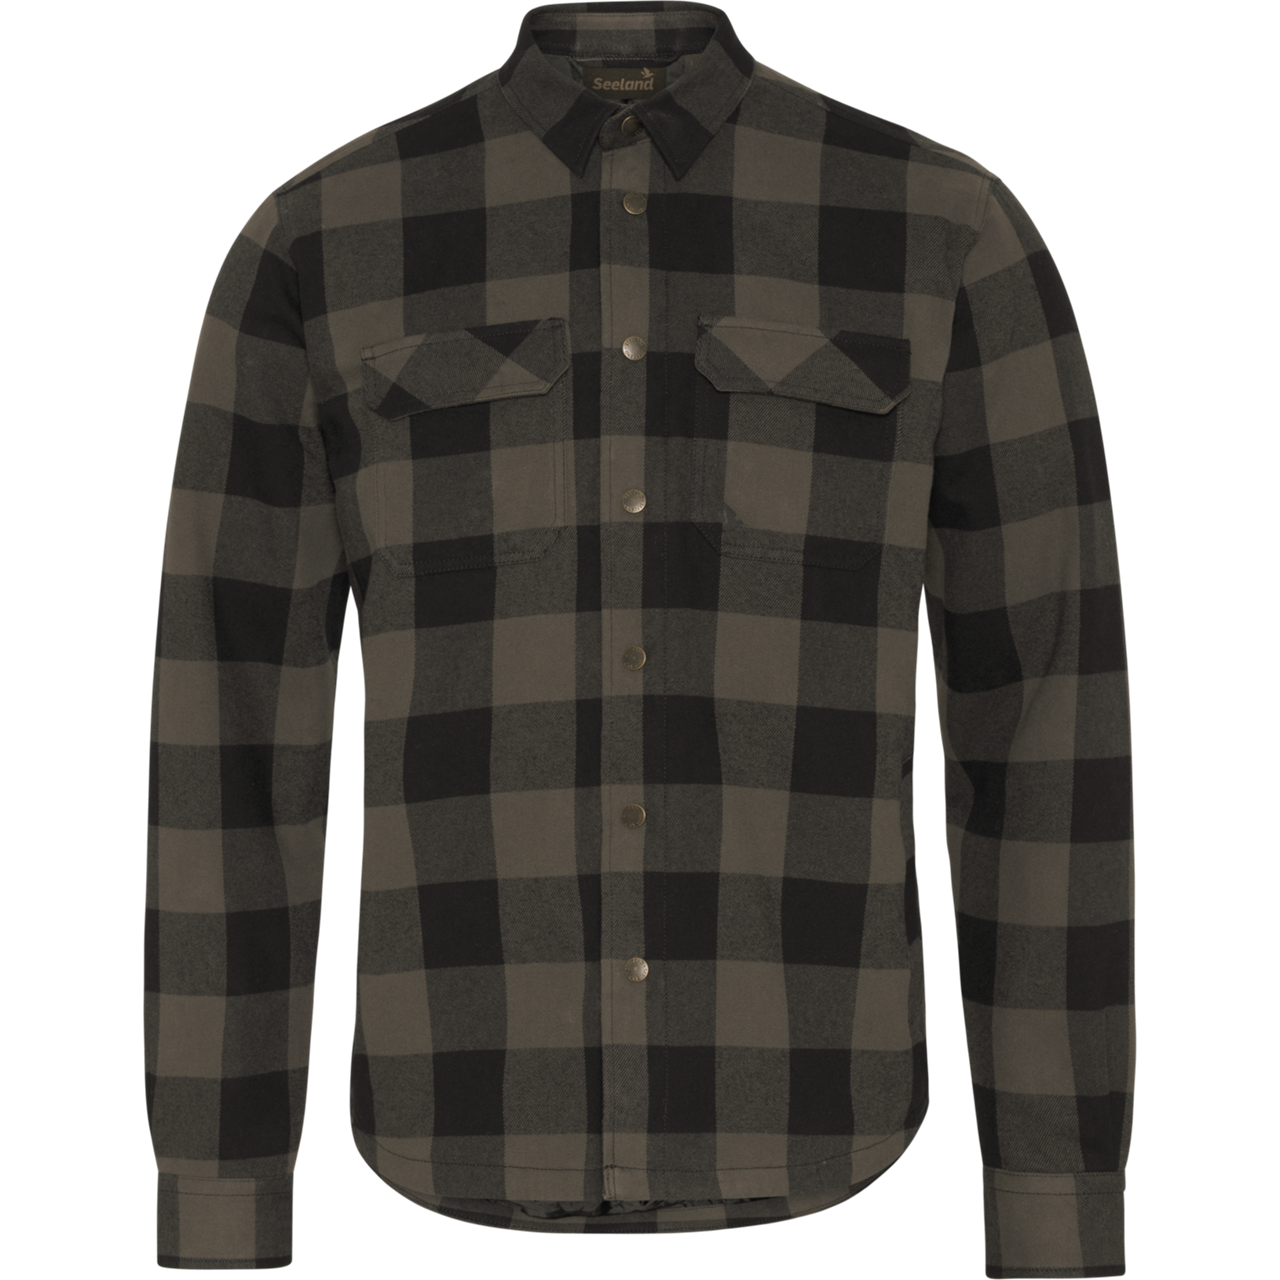 Se Seeland Canada skjorte limited edition (Grey Check, 3XL) hos Specialbutikken